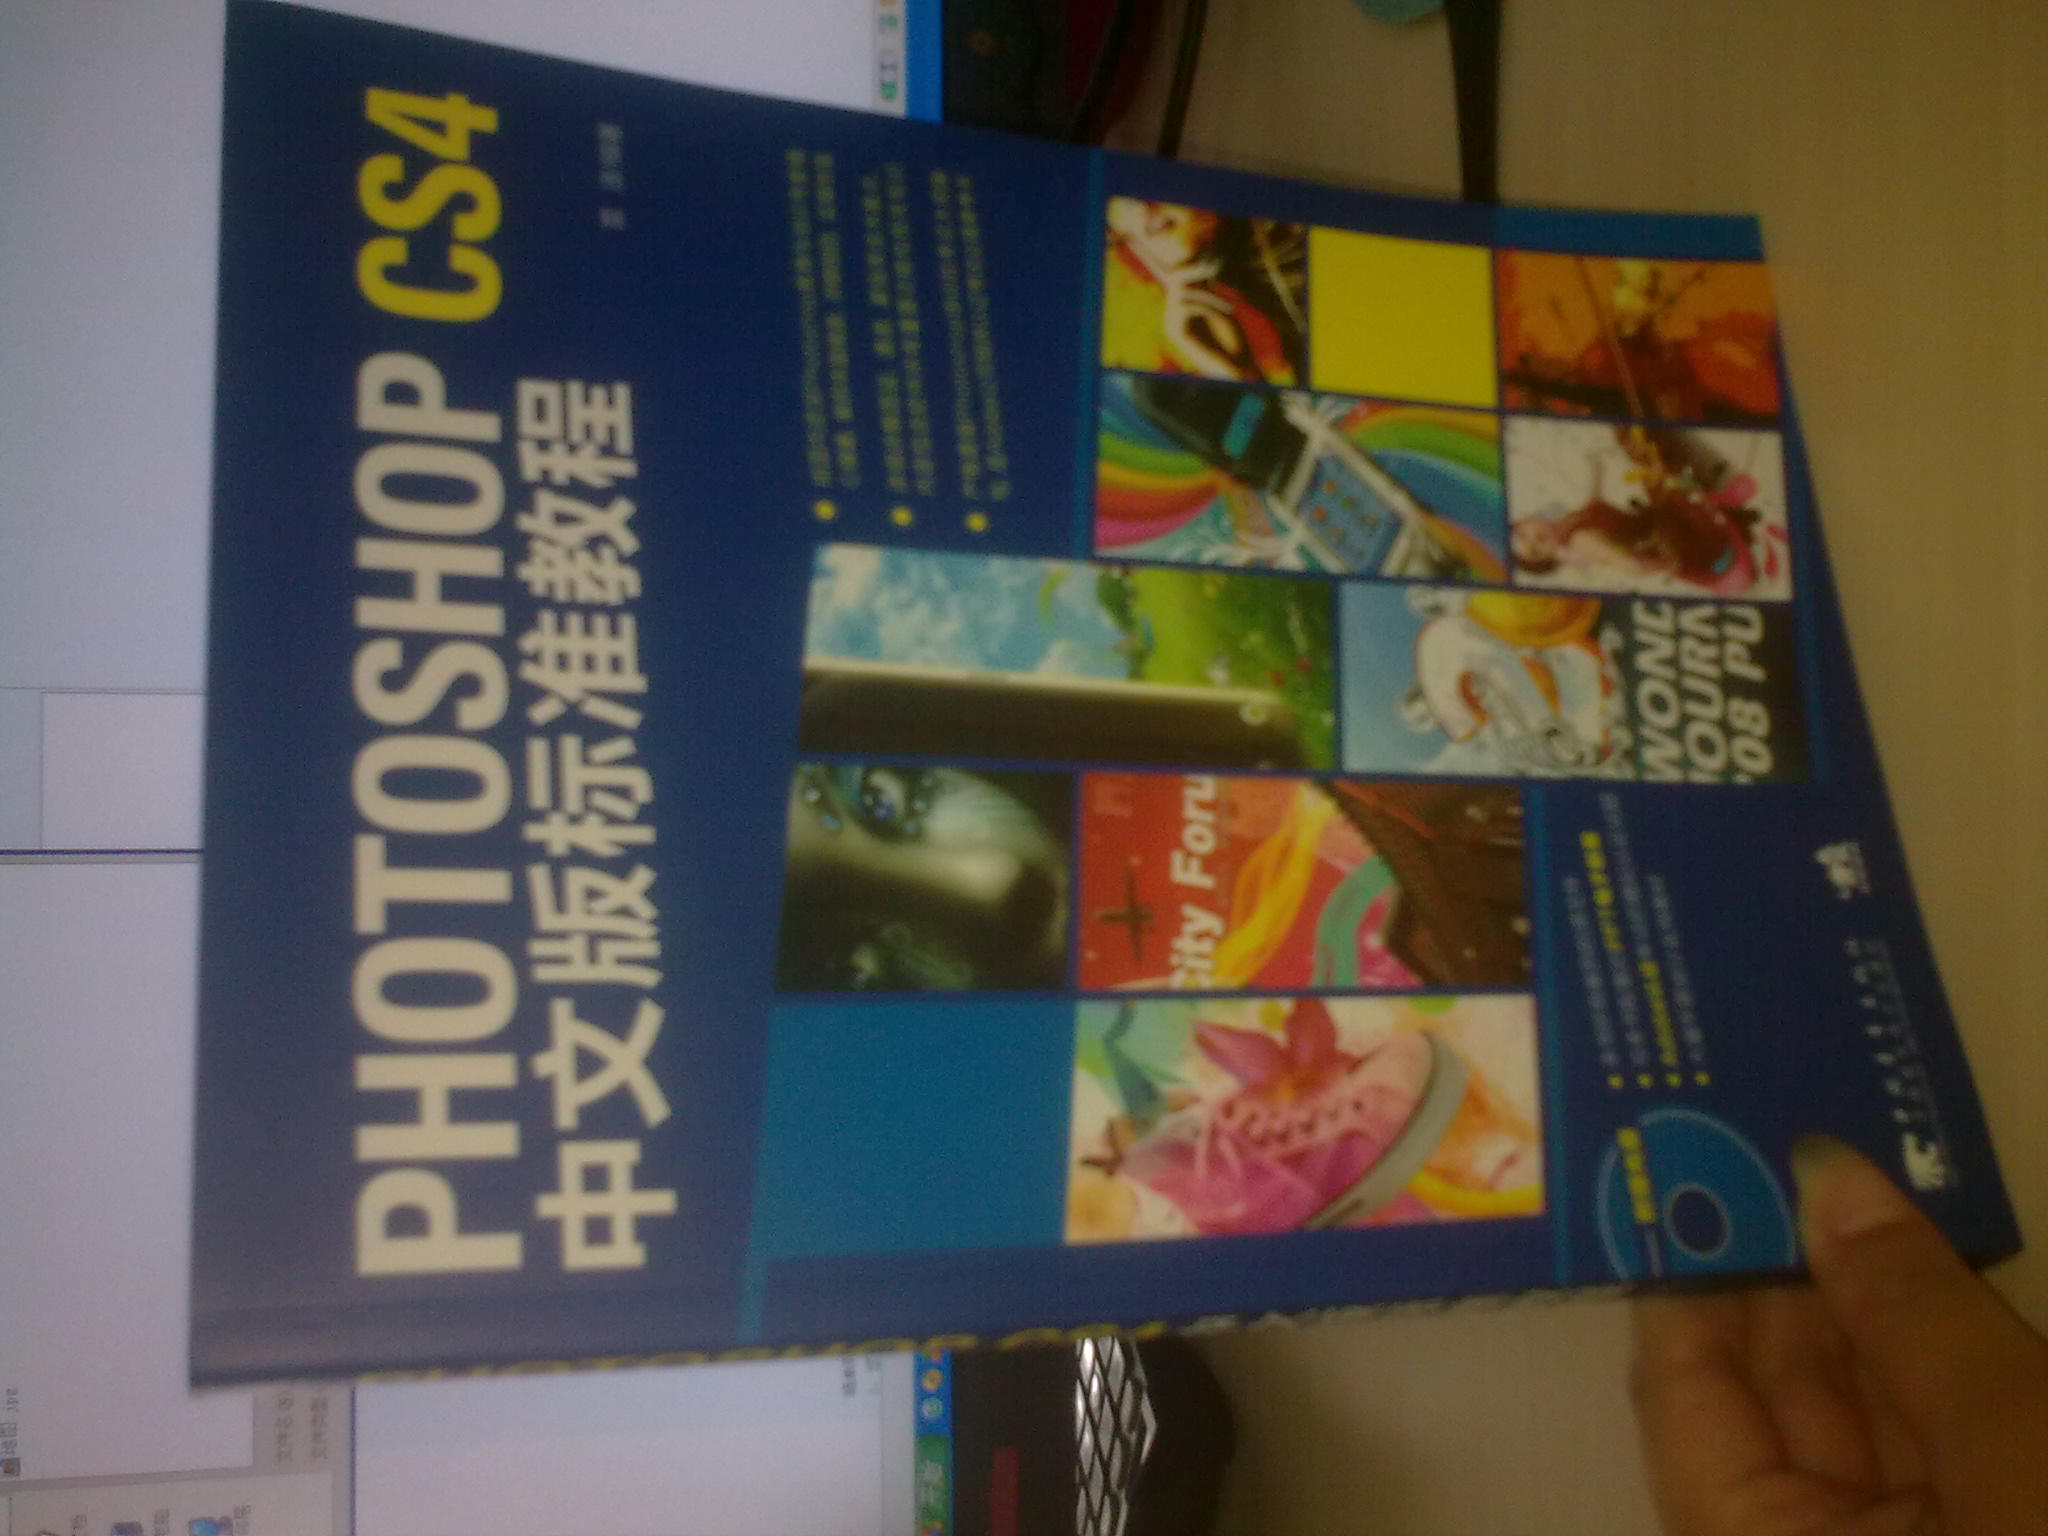 Photoshop CS4中文版标准教程（附光盘1张） 实拍图